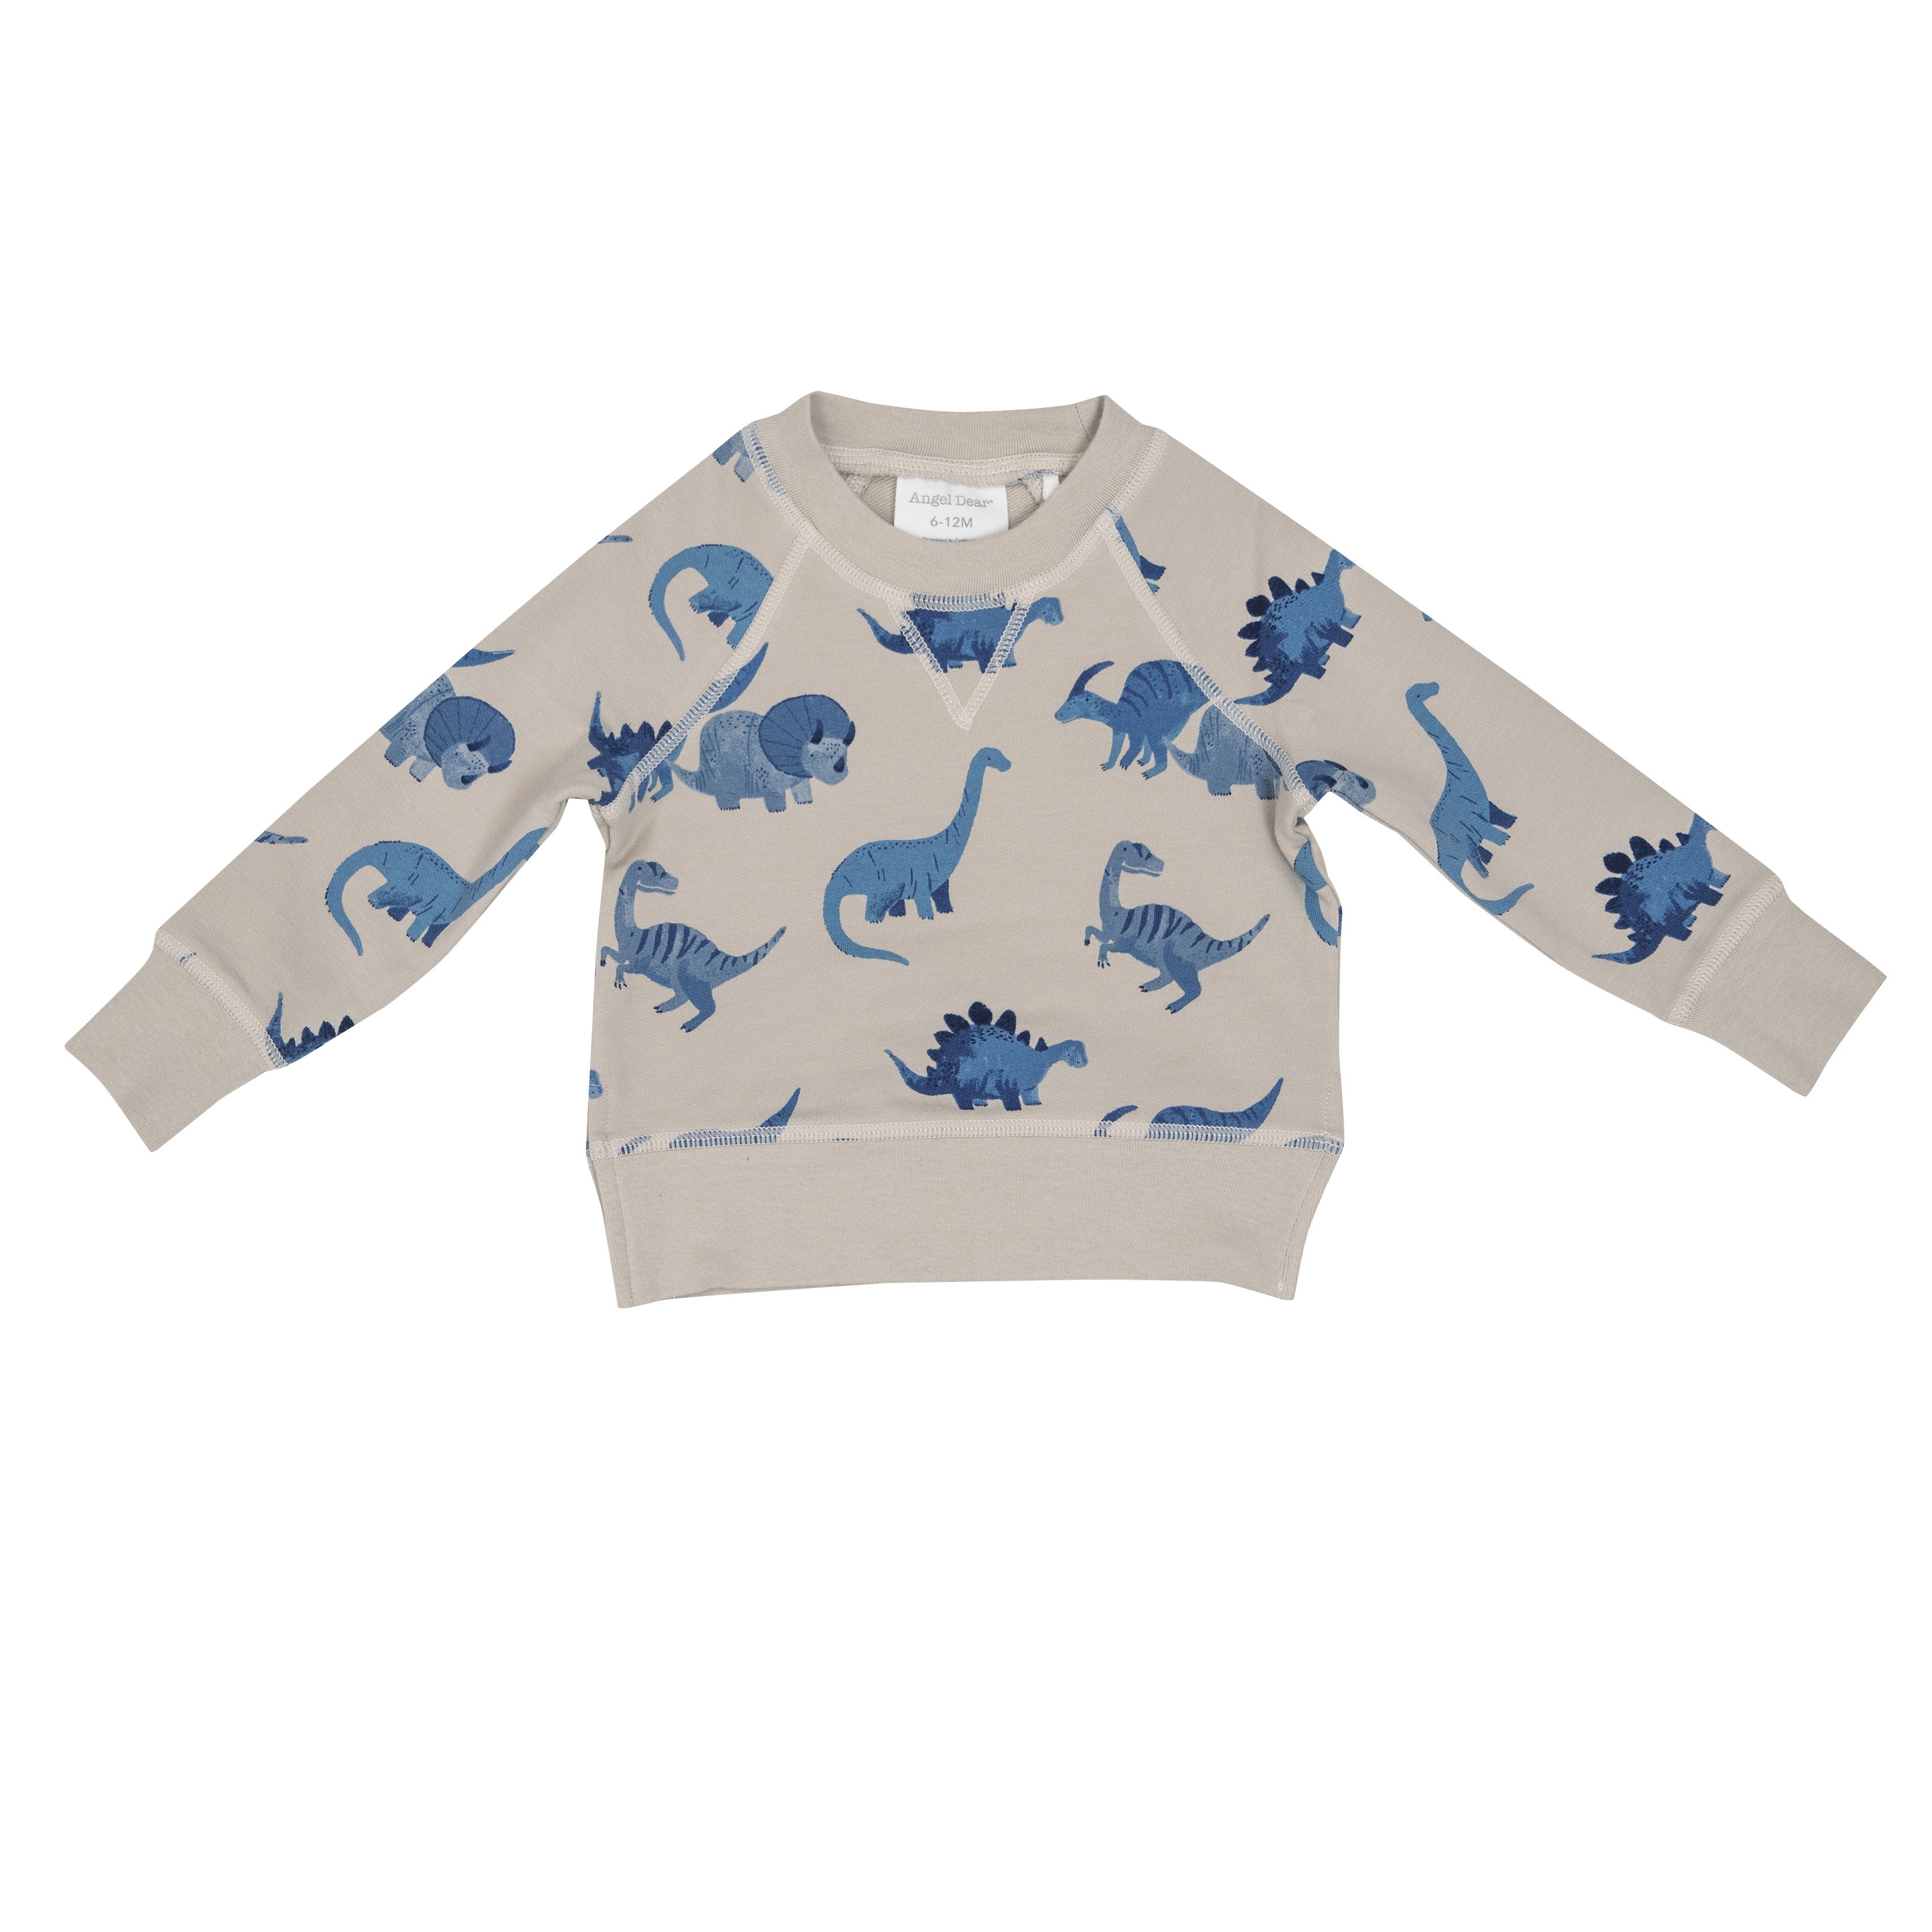 grey crewneck sweatshirt with blue dinosaur print